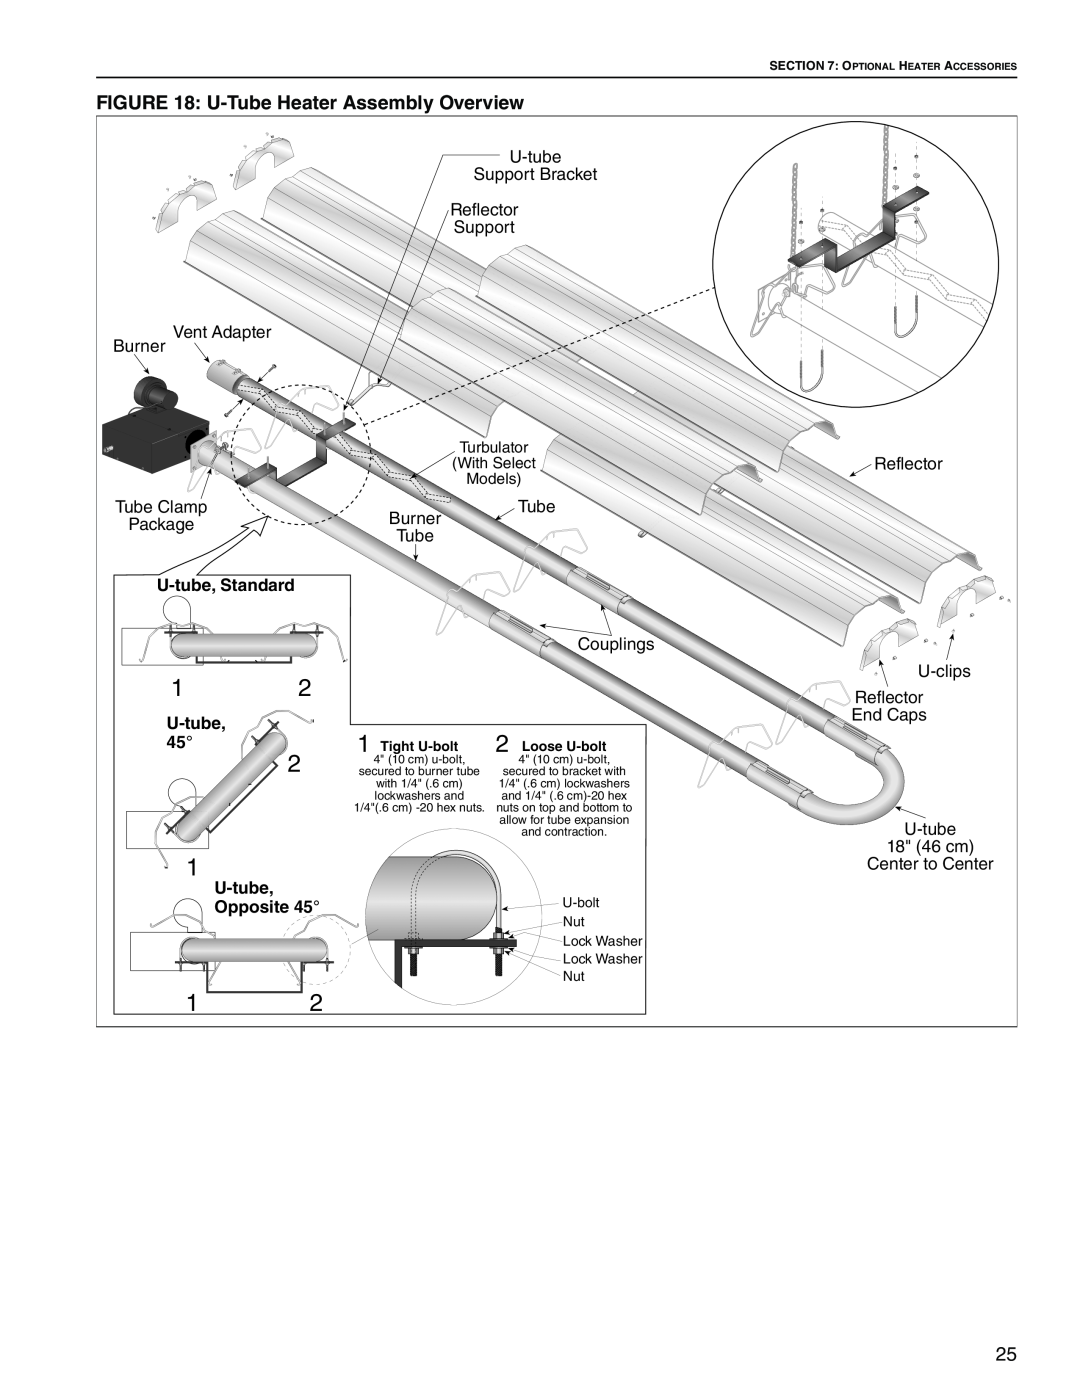 Roberts Gorden Linear Heater manual U-TubeHeater Assembly Overview, U-tube,Standard, Opposite 